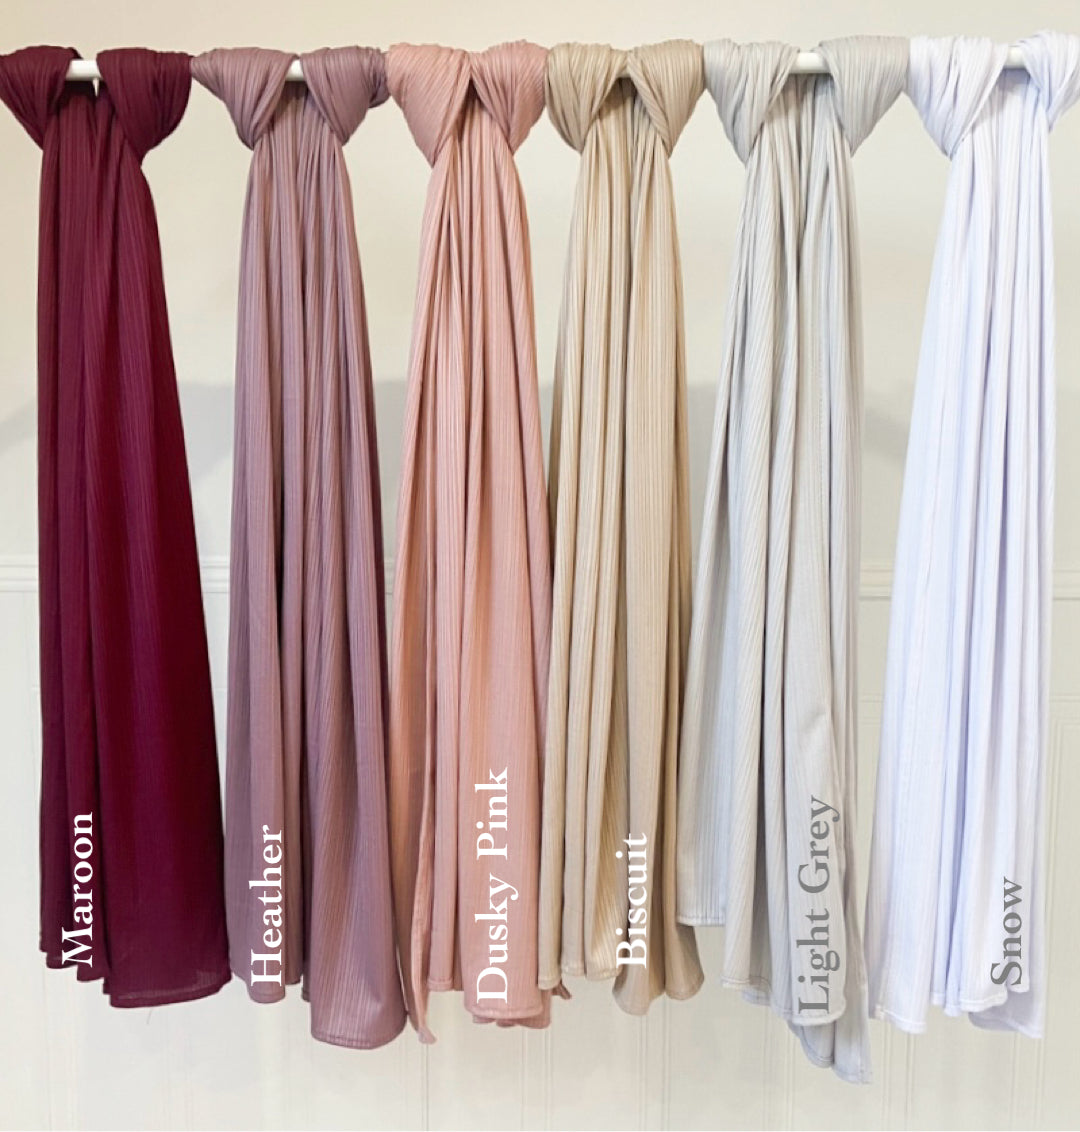 Hijab Ribbed Premium Jersey - Over 10 shades